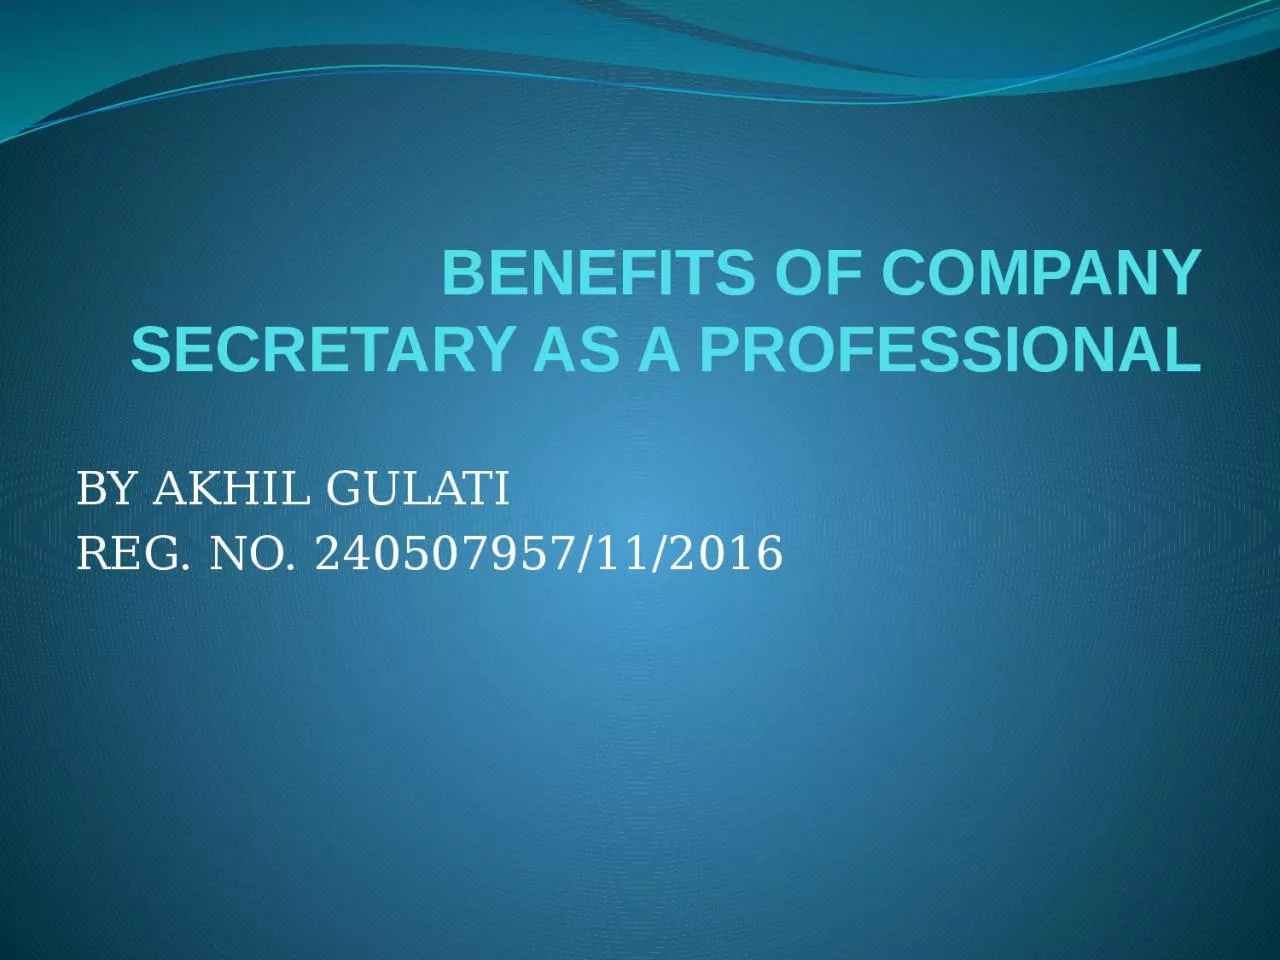 BENEFITS OF COMPANY SECRETARY AS A PROFESSIONAL